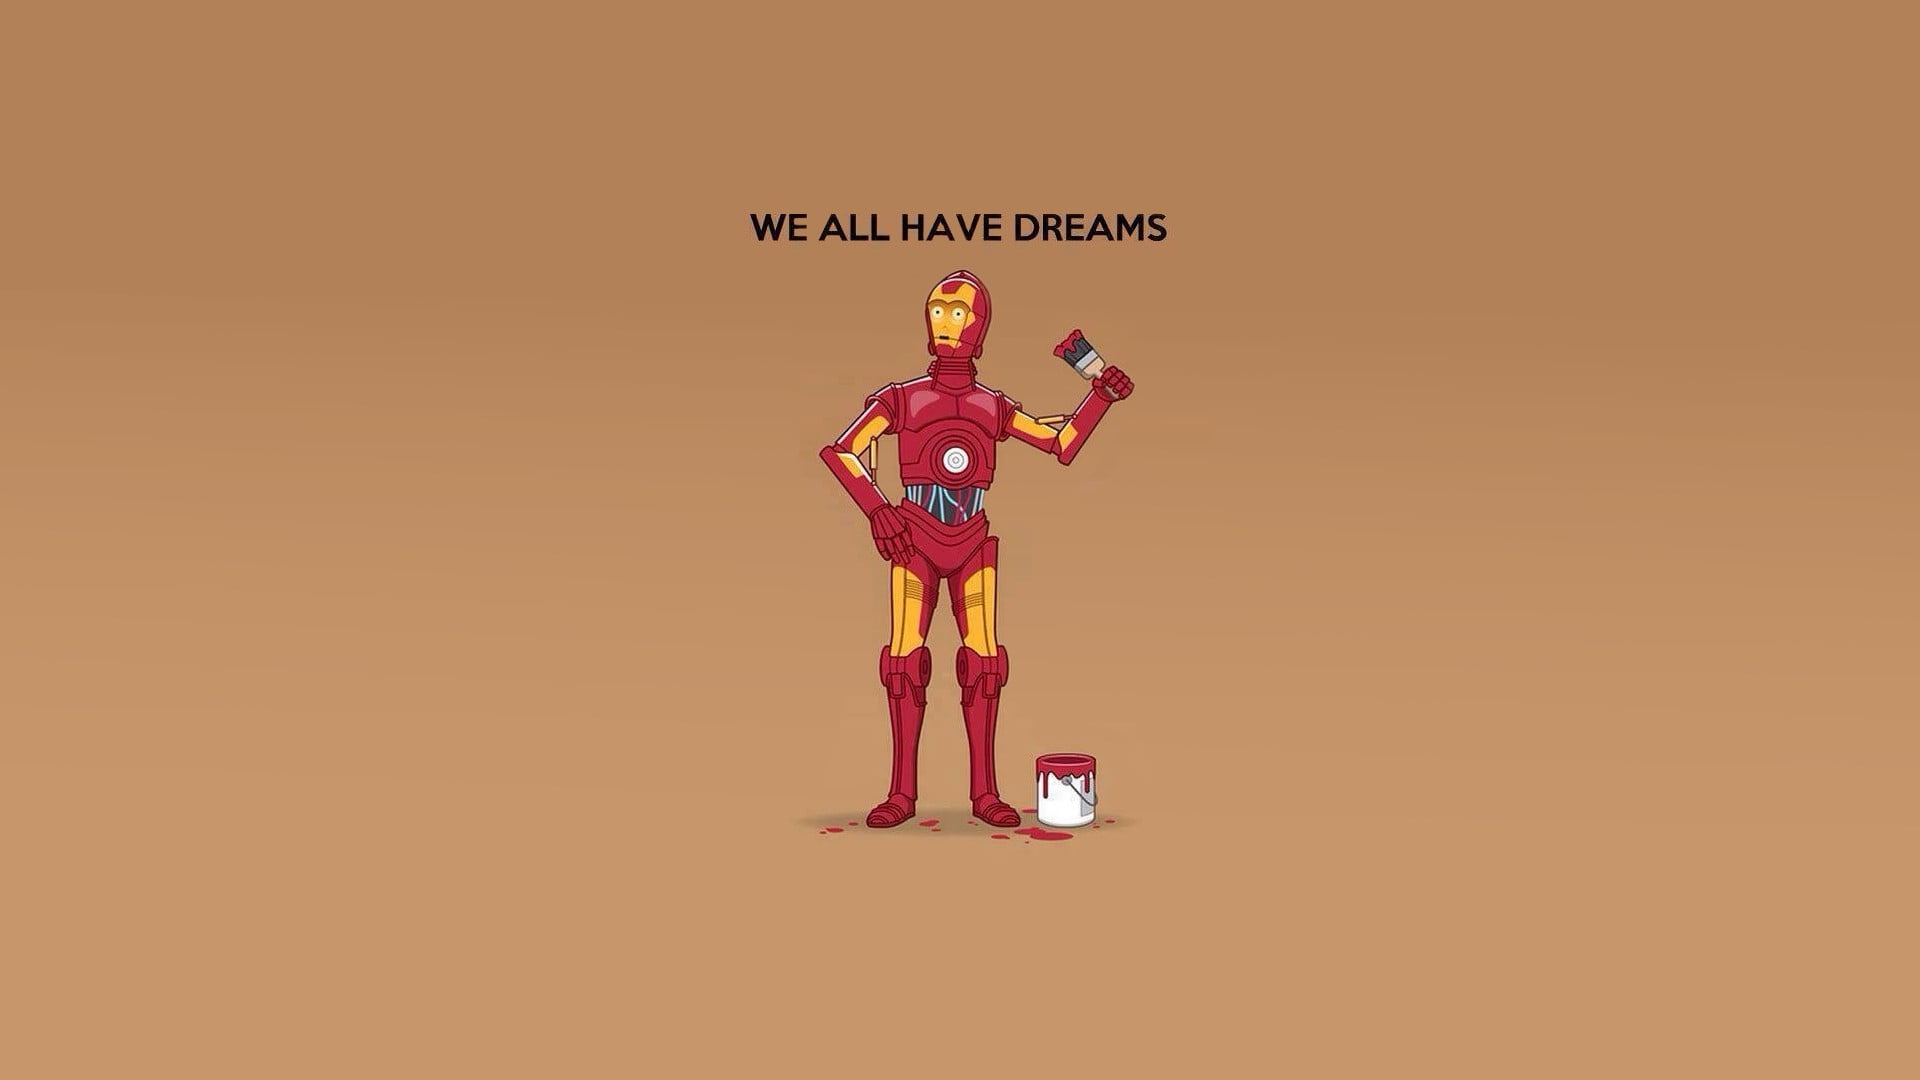 Iron Man illustration with text overlay, humor, Star Wars, C-3PO